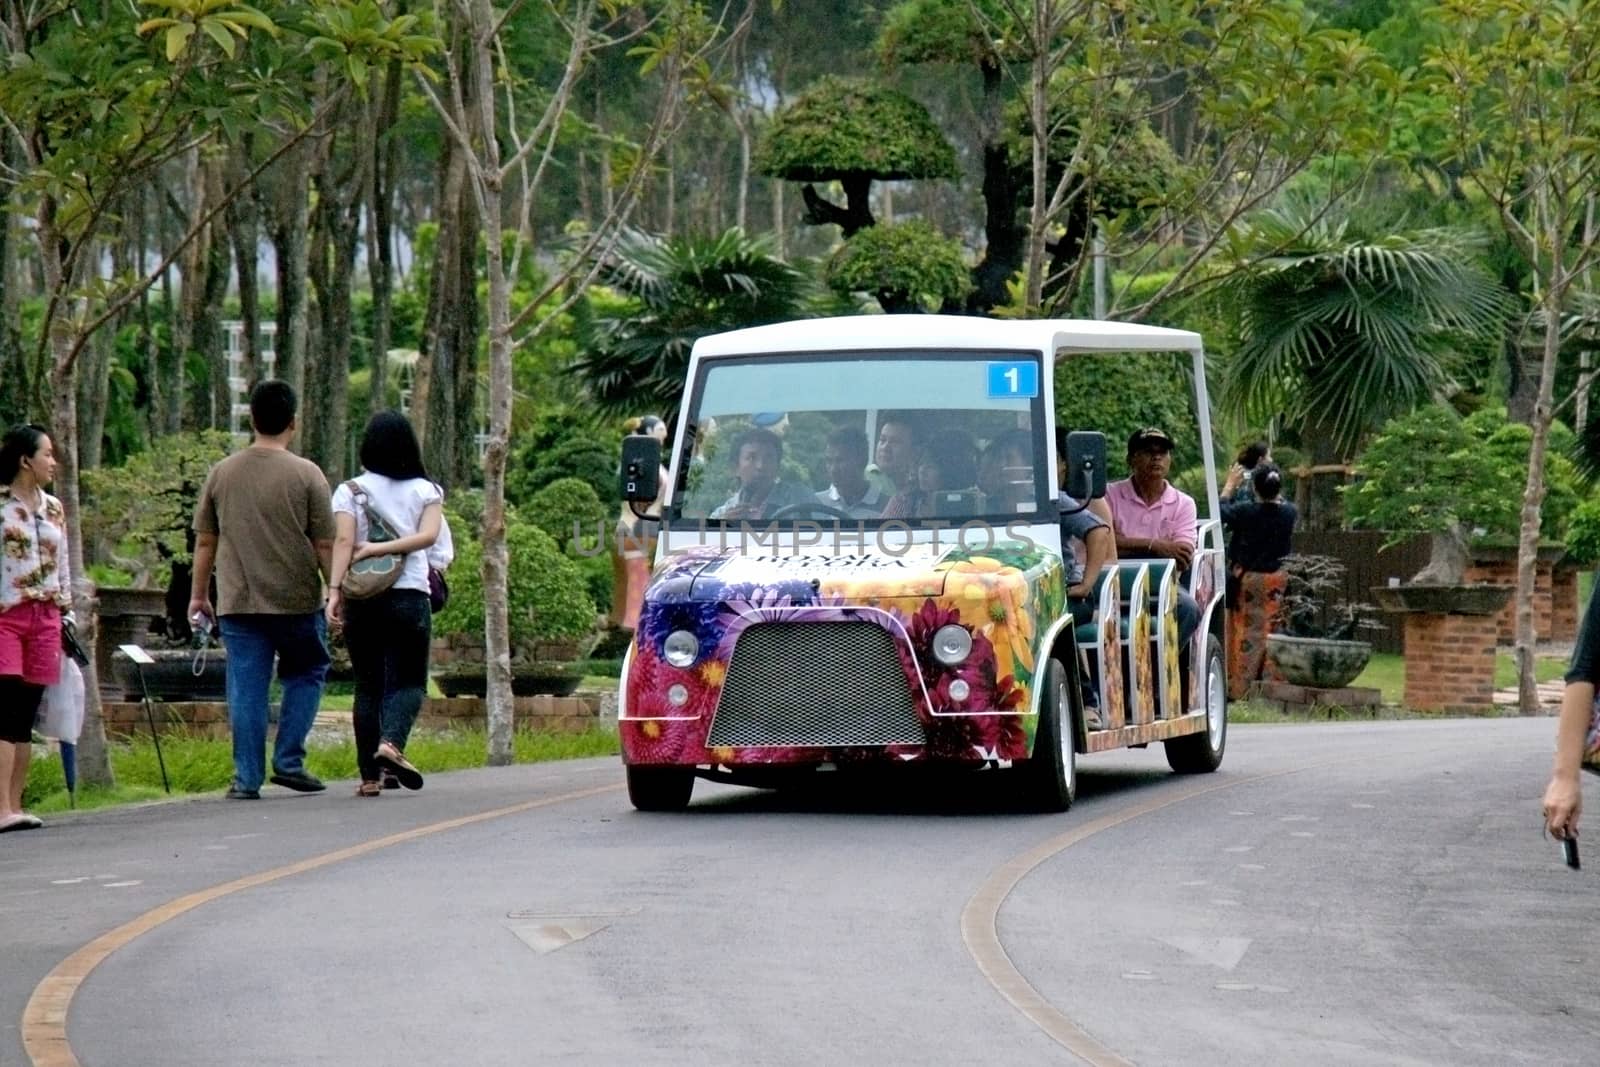 Shuttle bus service in amusement park. by mranucha